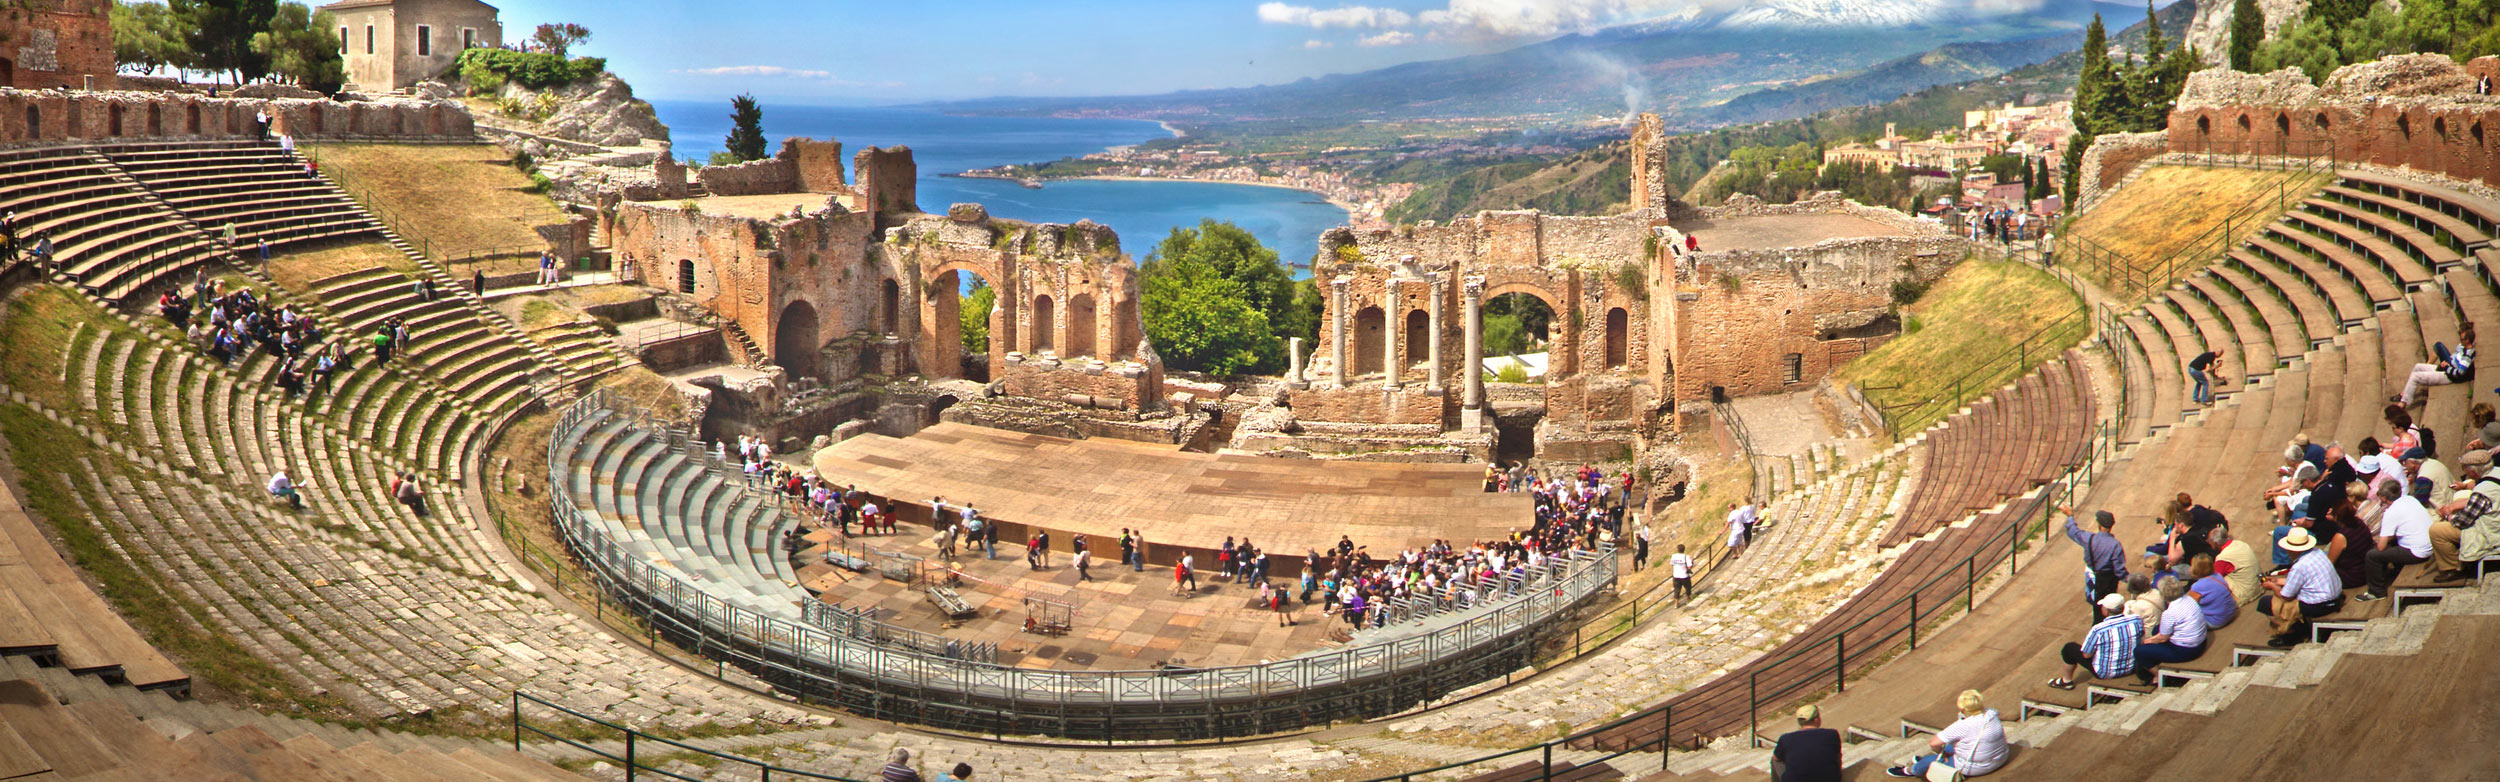 Taormina and the greek theatre